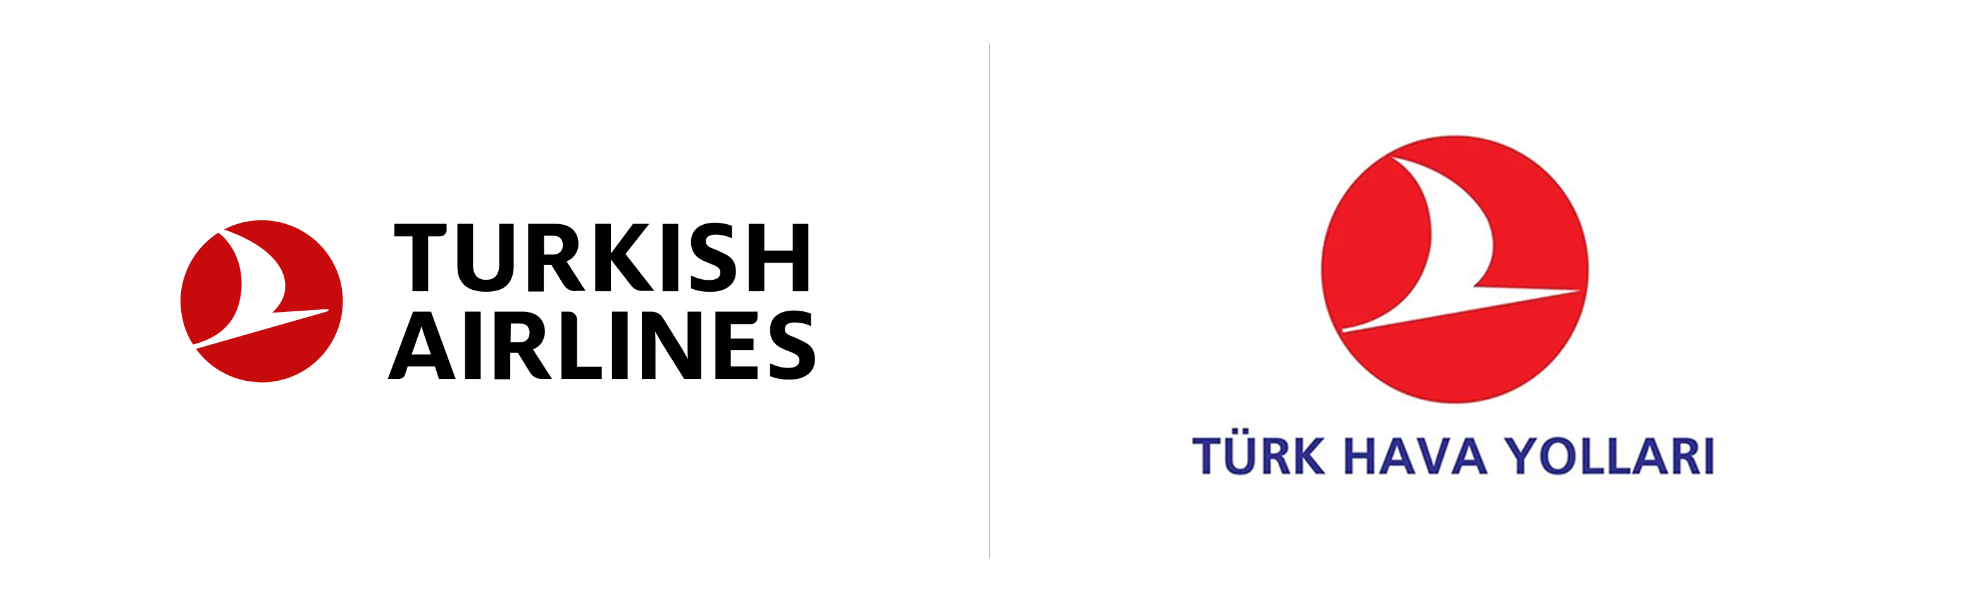 logo Turkish Airlines i Turk Hava Yollari